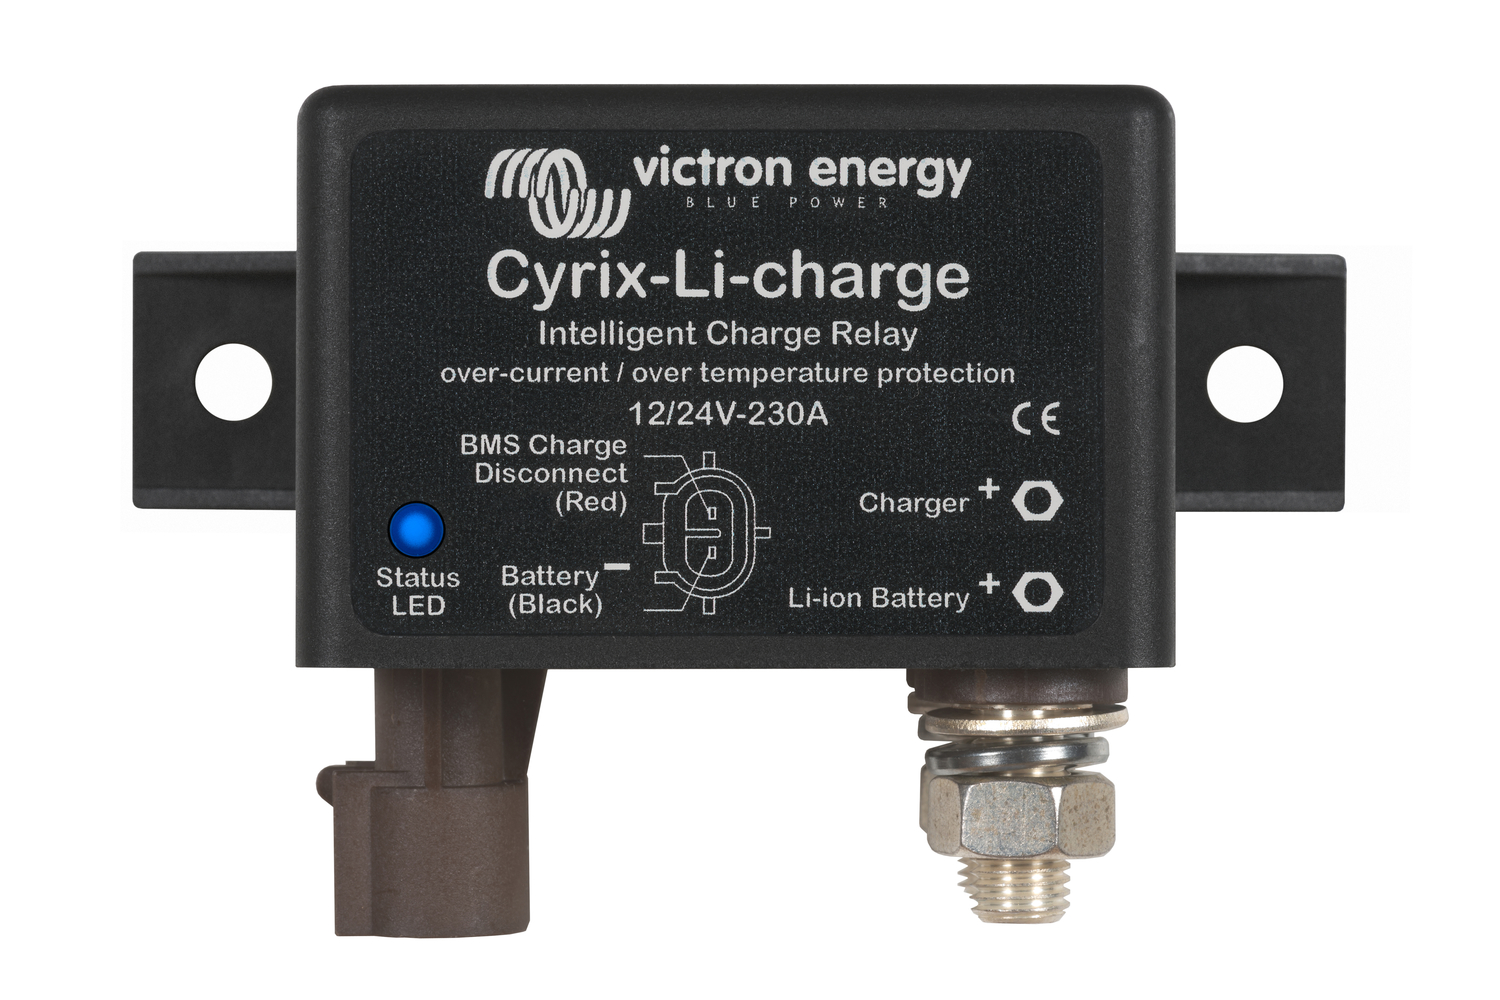 Victron - Cyrix-Li-charge 12/24V-120A intelligent charge relay